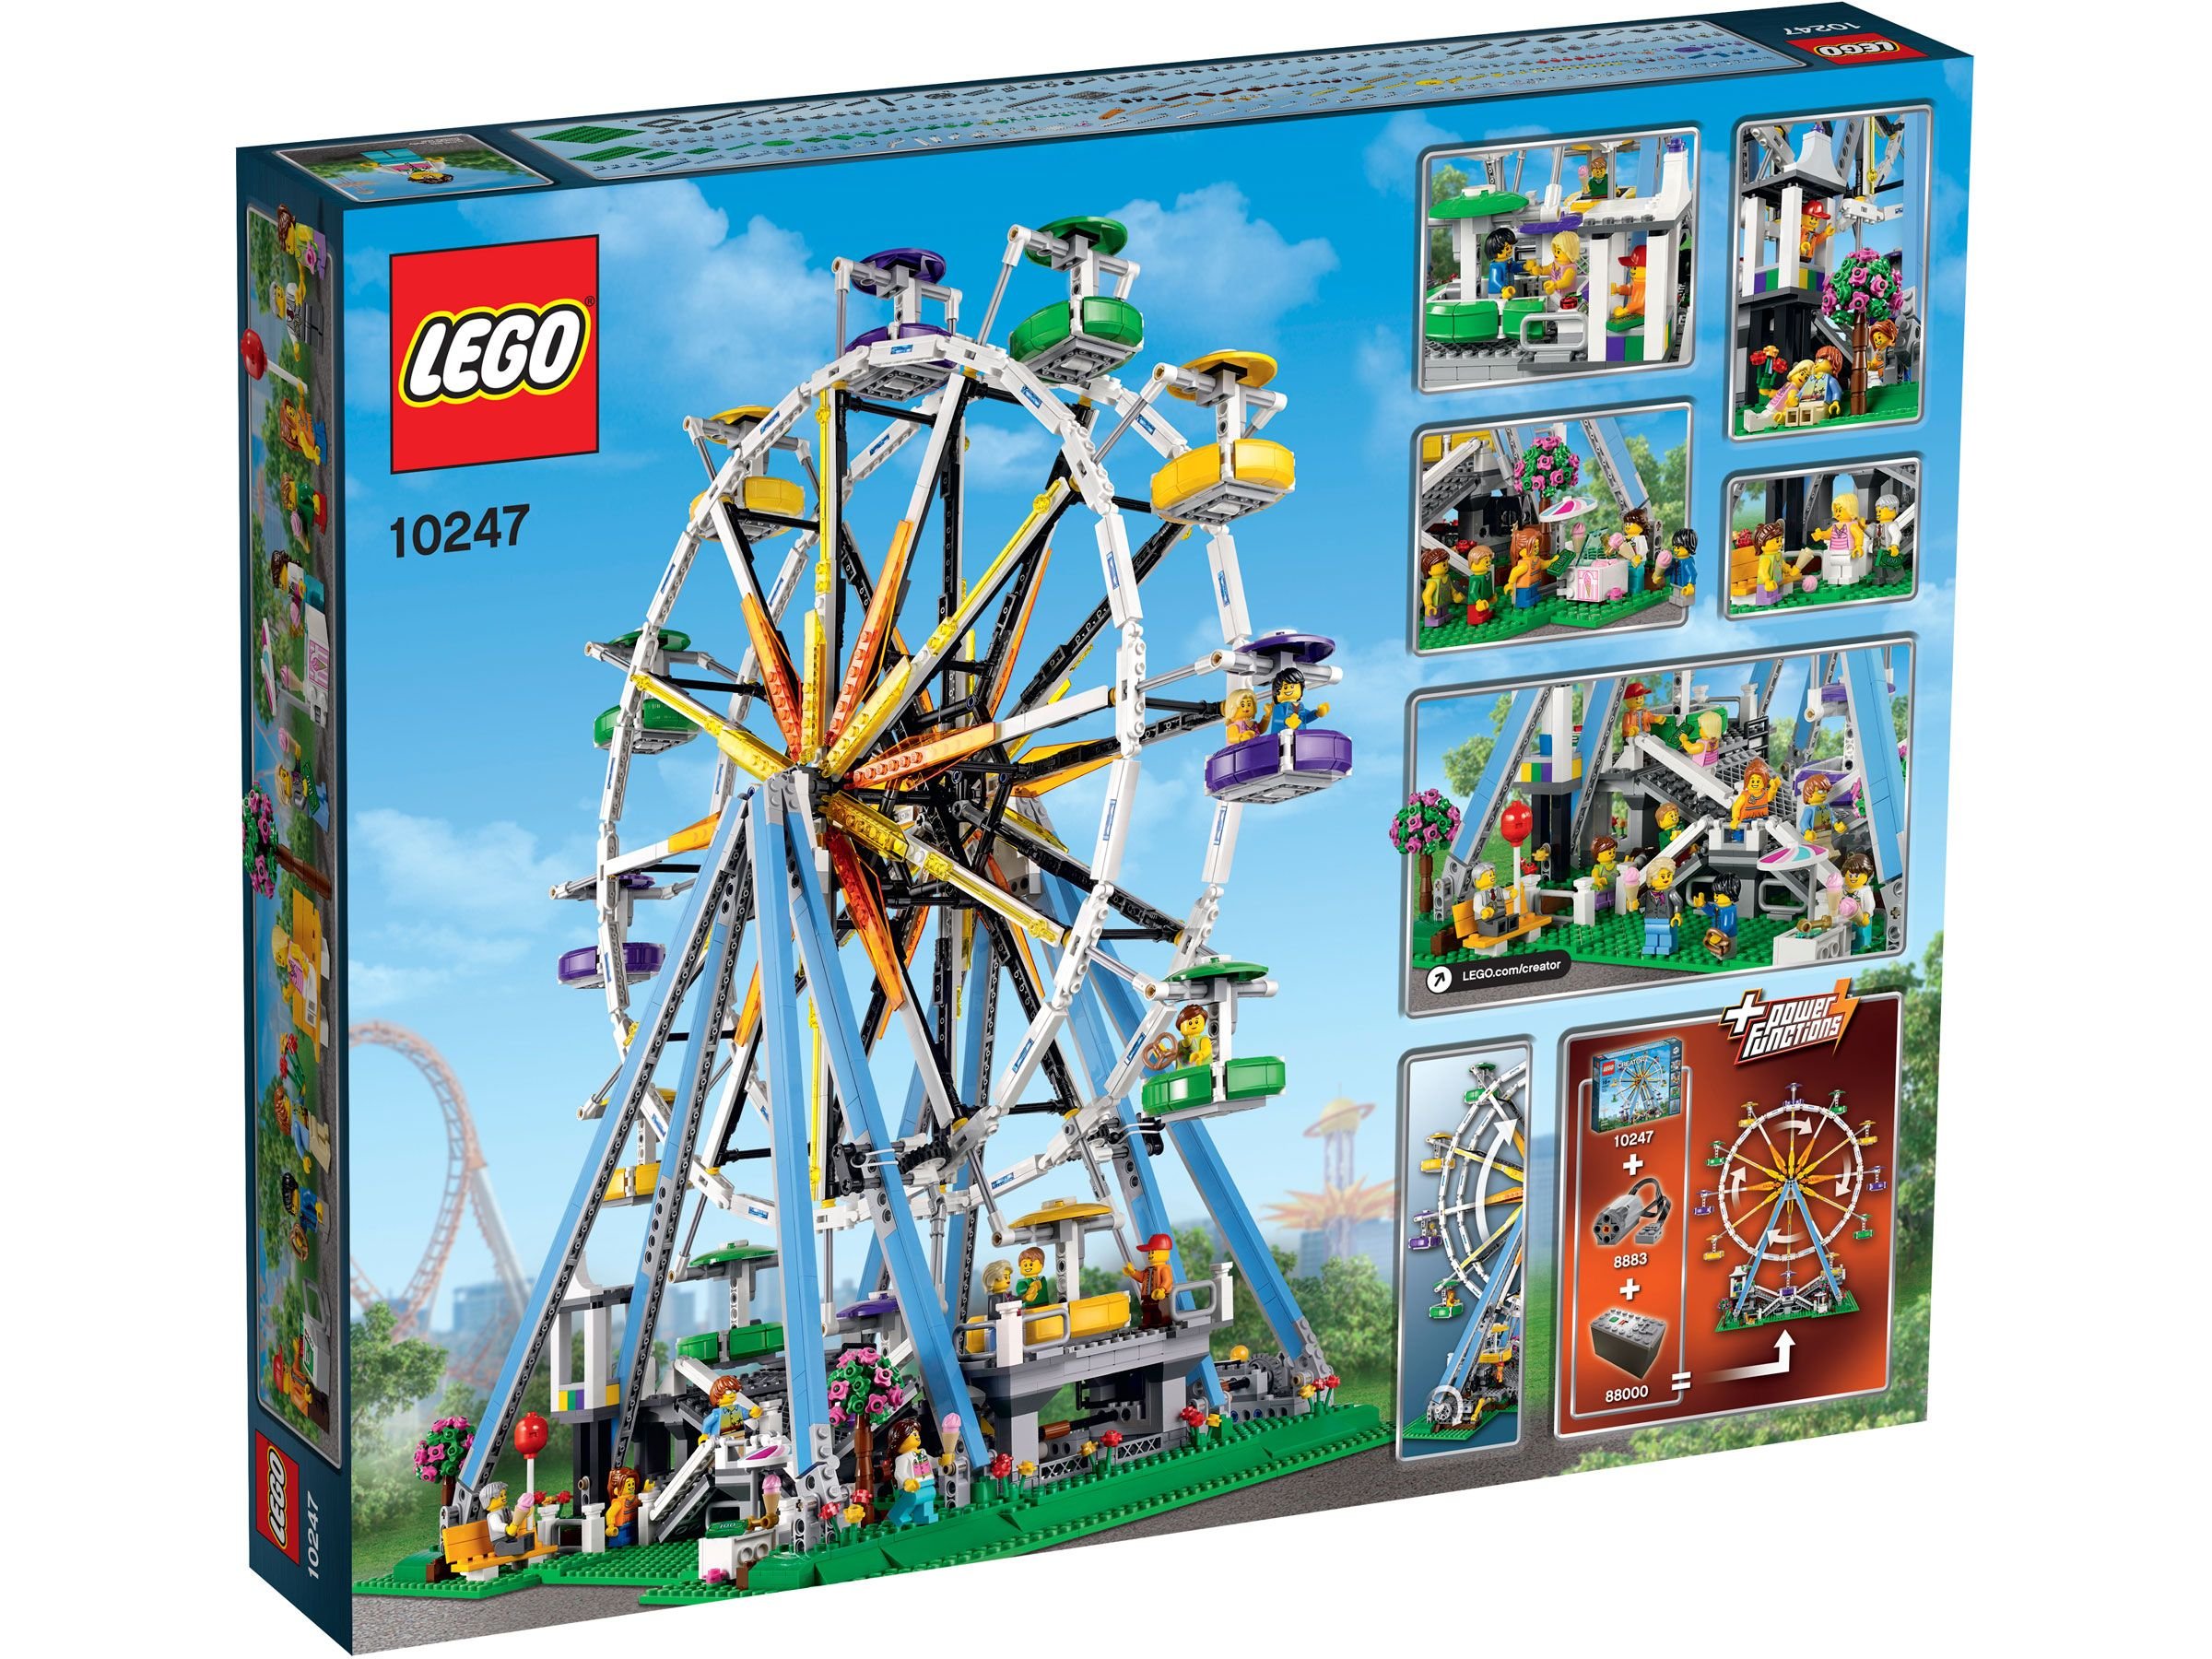 LEGO Advanced Models 10247 Riesenrad (Ferris Wheel) LEGO_10247_box5_na_redesign.jpg